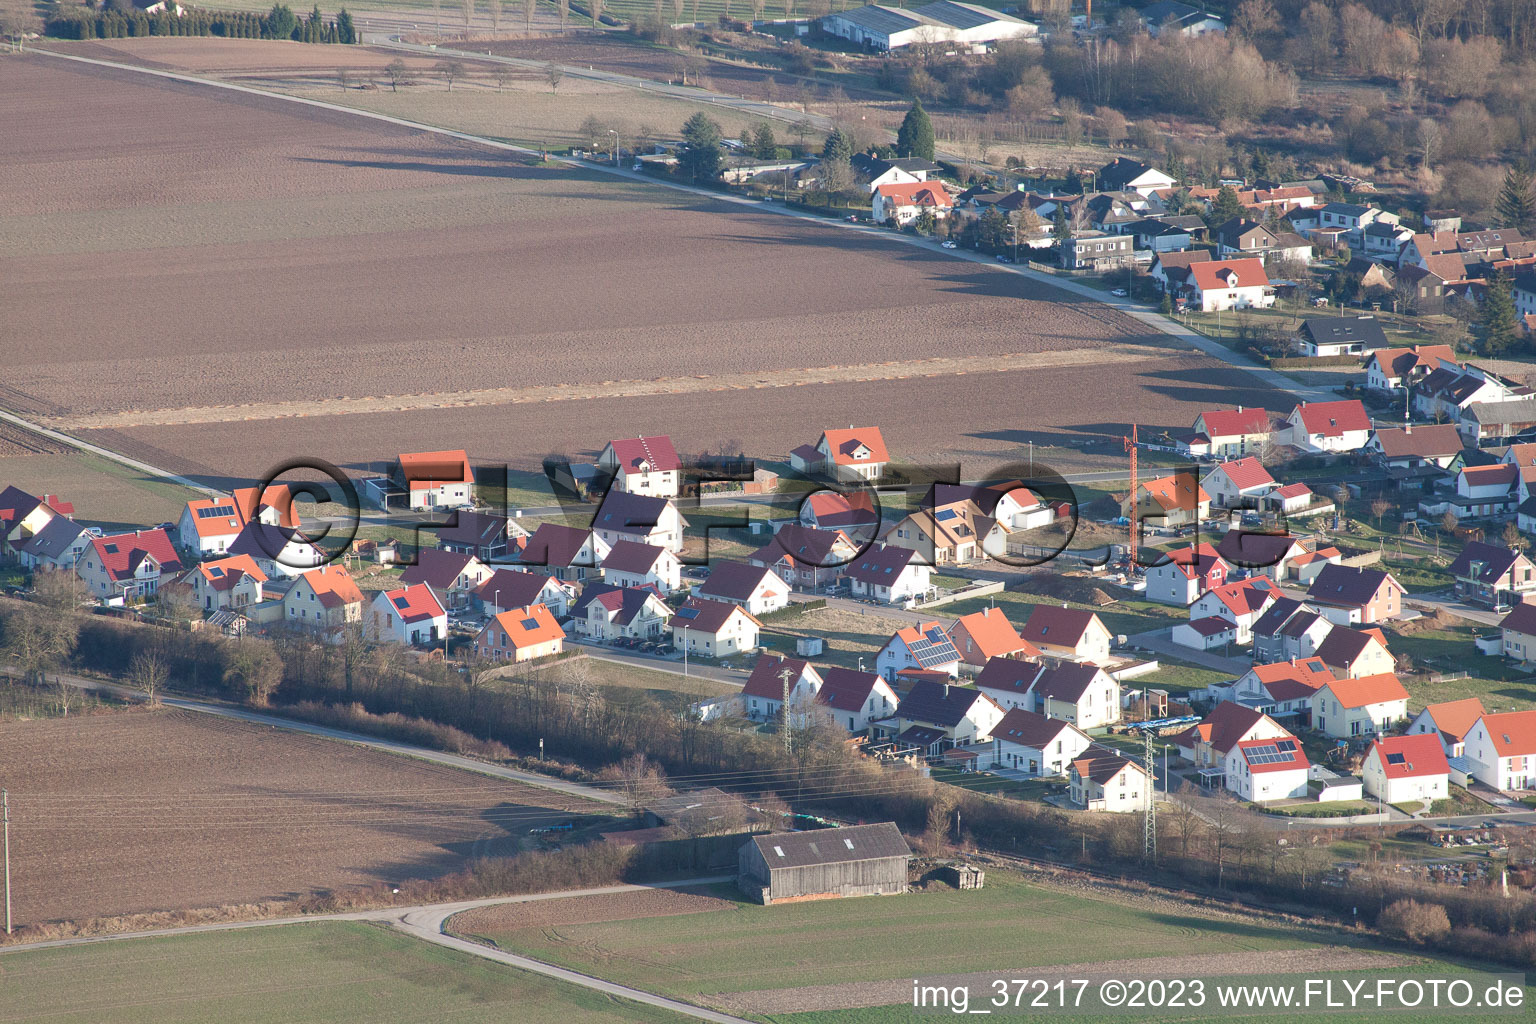 Aerial view of New development area NE in the district Schaidt in Wörth am Rhein in the state Rhineland-Palatinate, Germany